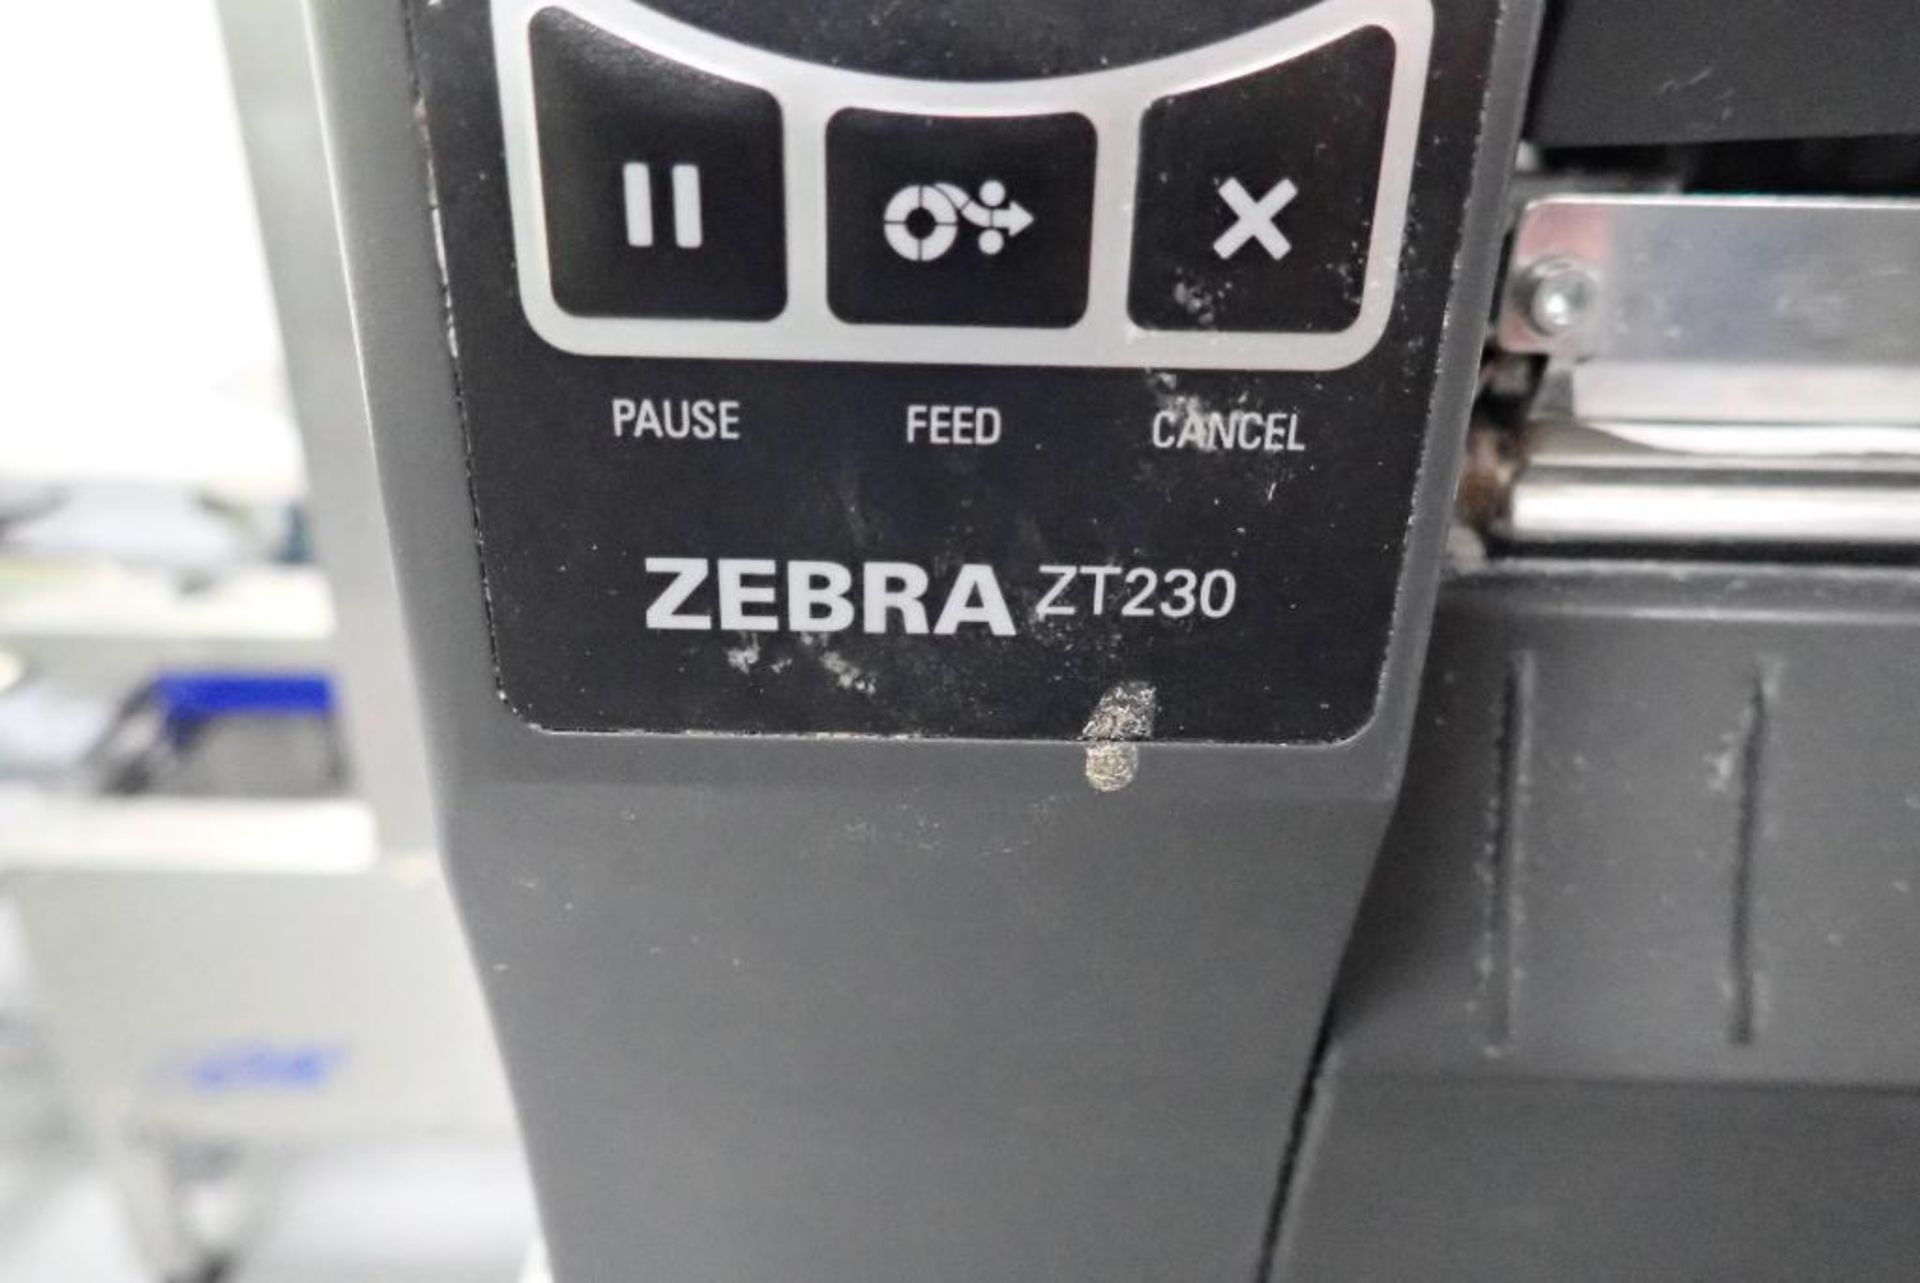 Zebra printer - Image 4 of 7